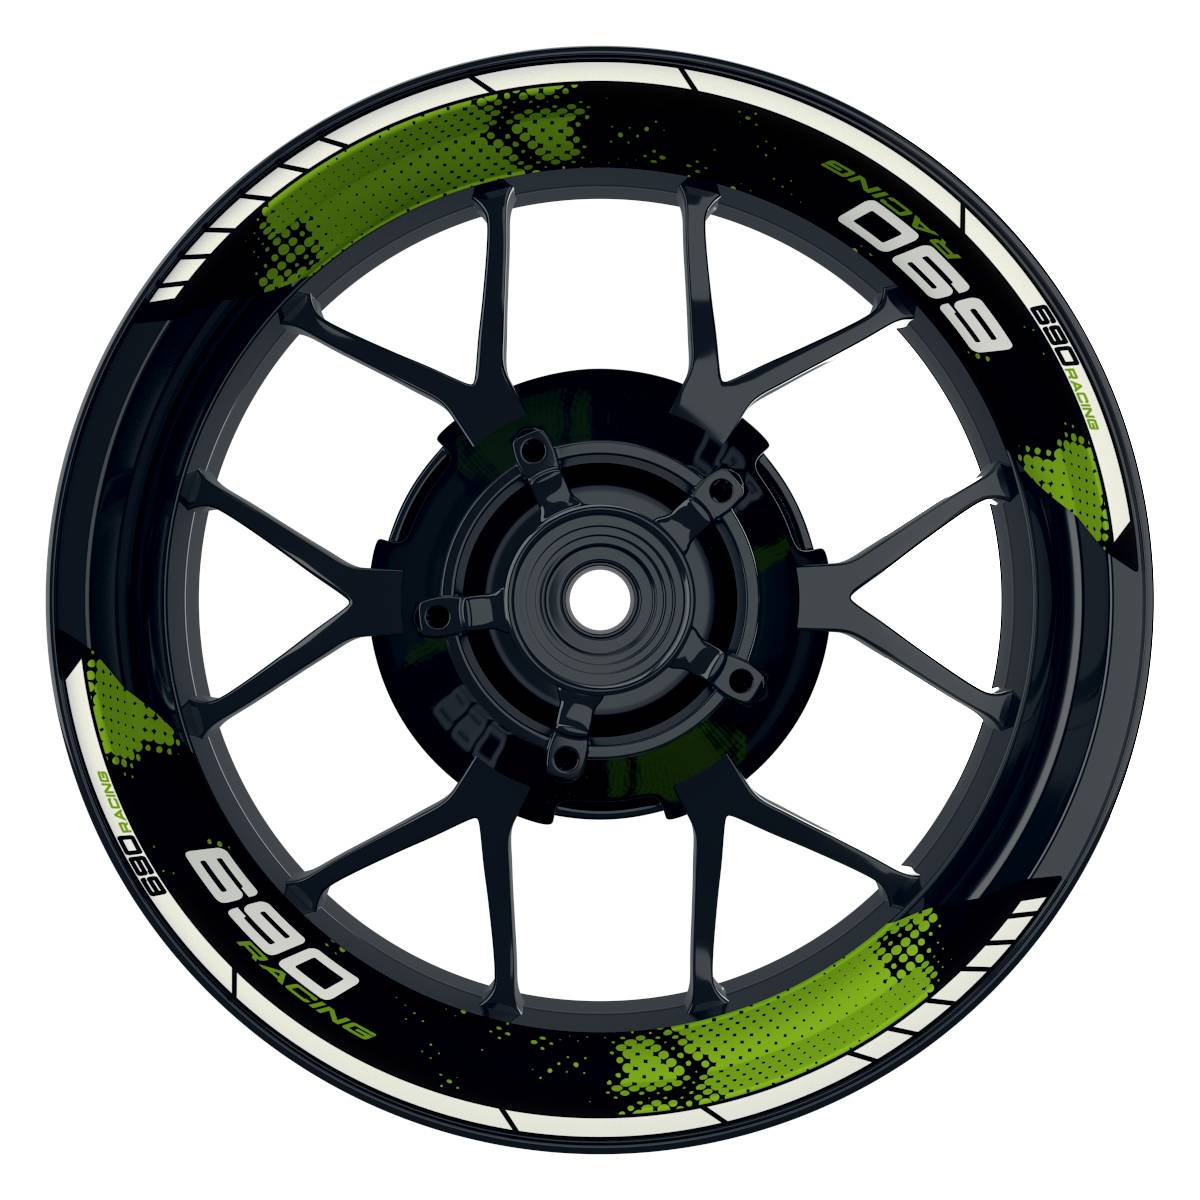 KTM Racing 690 Dots schwarz gruen Frontansicht